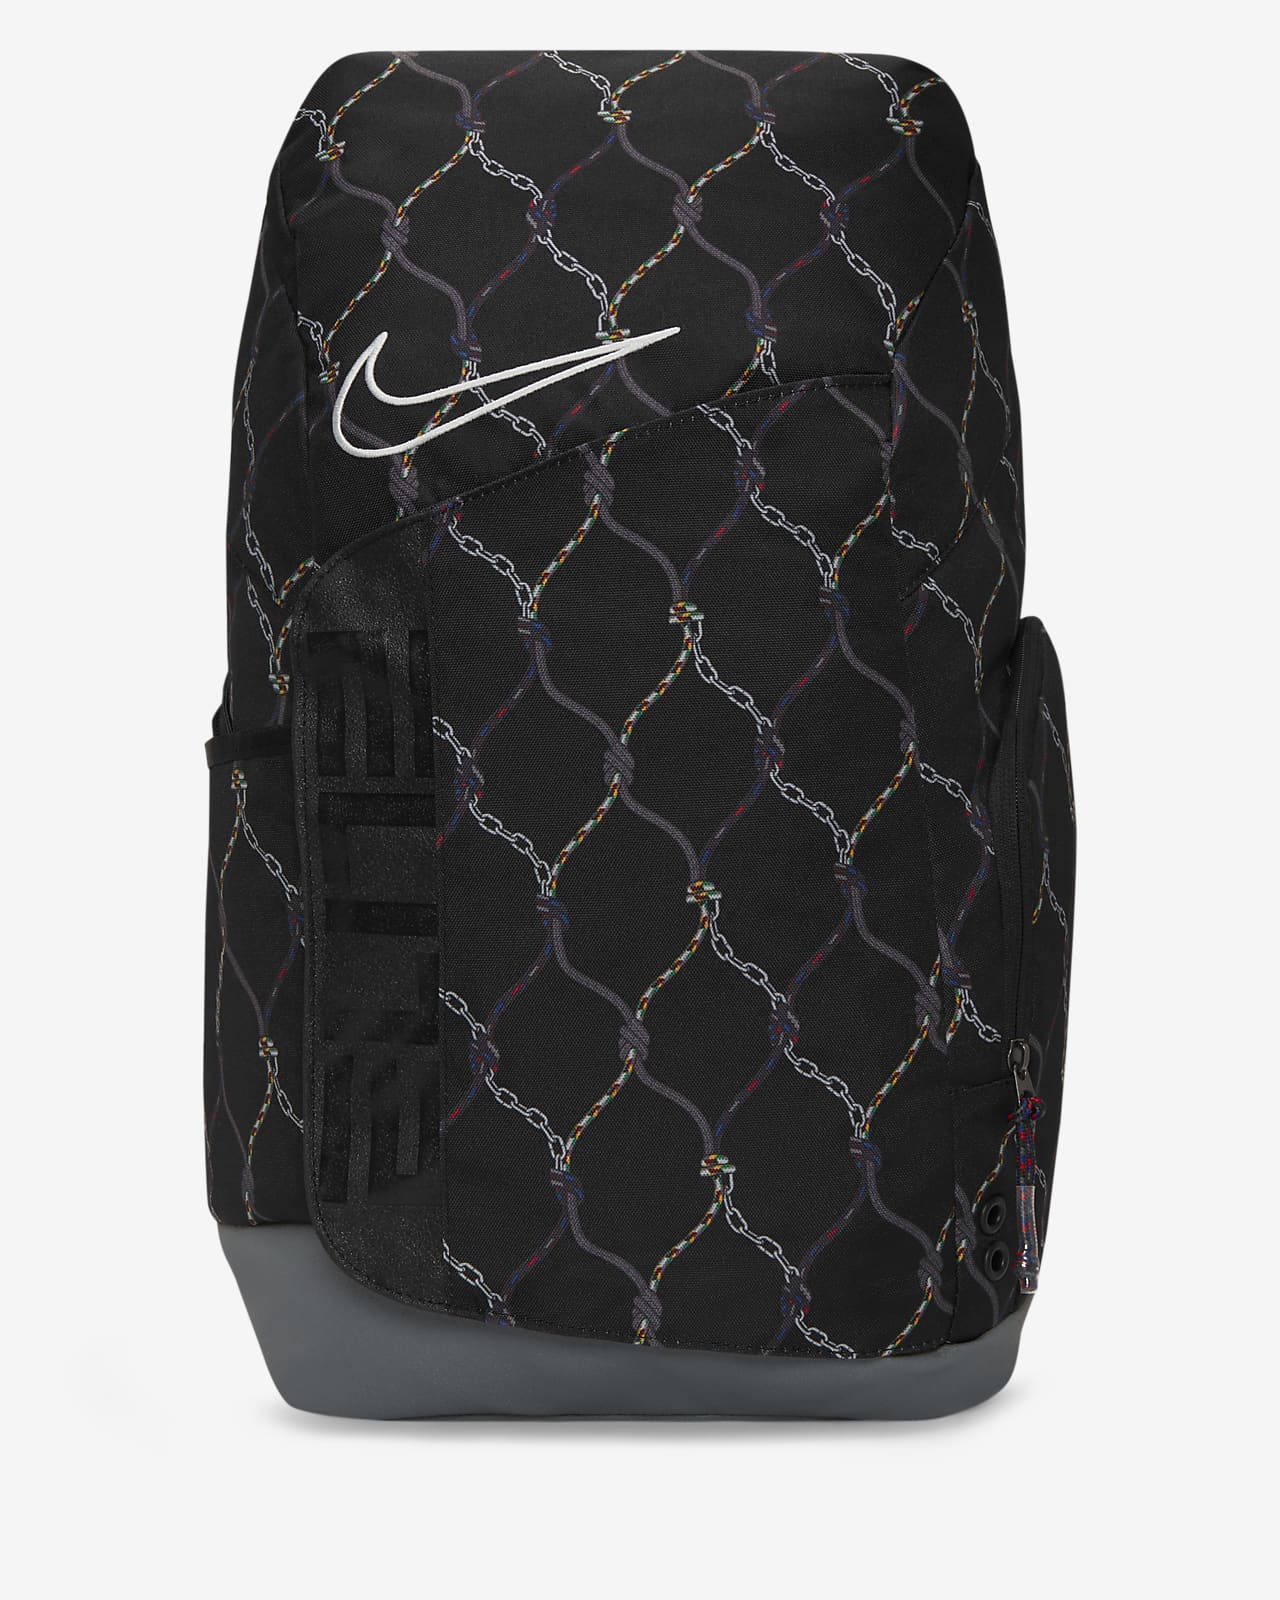 Nike Hoops Elite Pro Printed Basketball Backpack (32L)